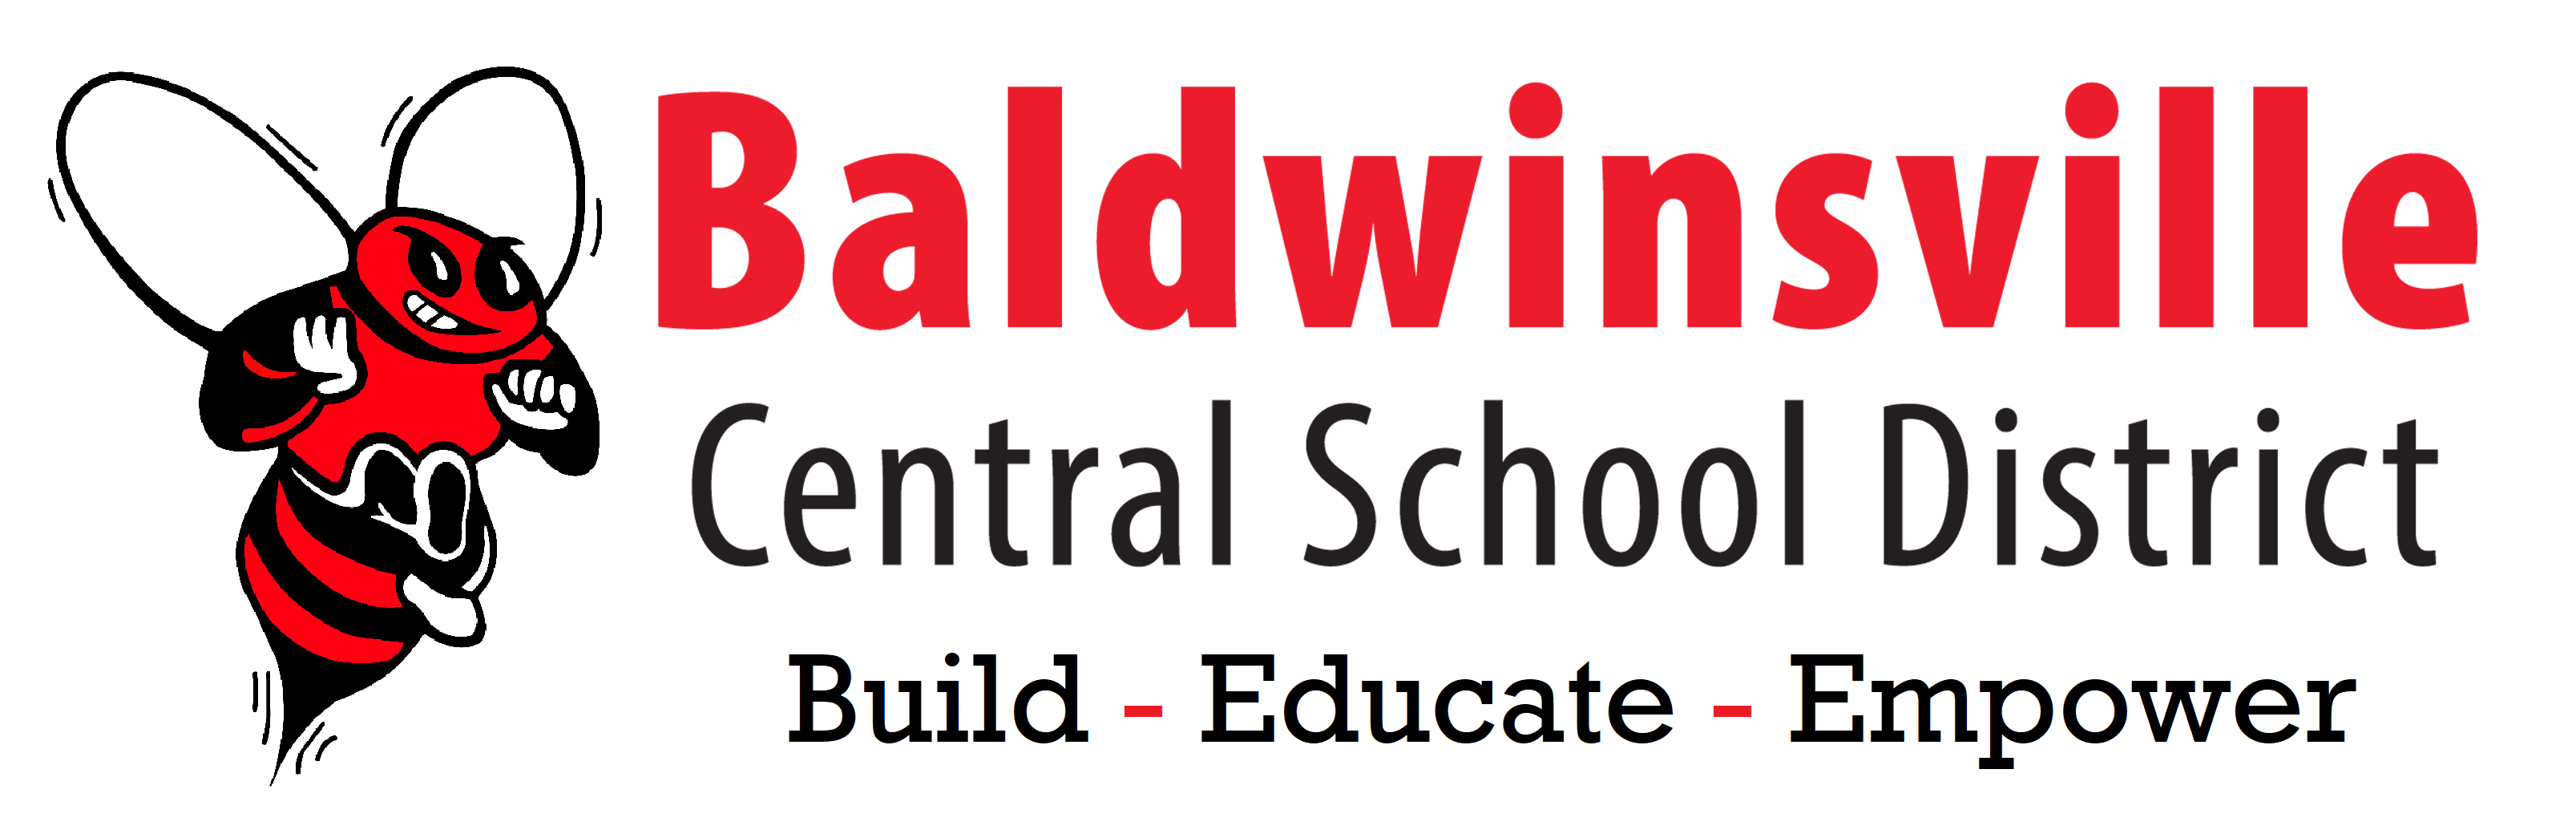 Organization logo of Baldwinsville Central School District